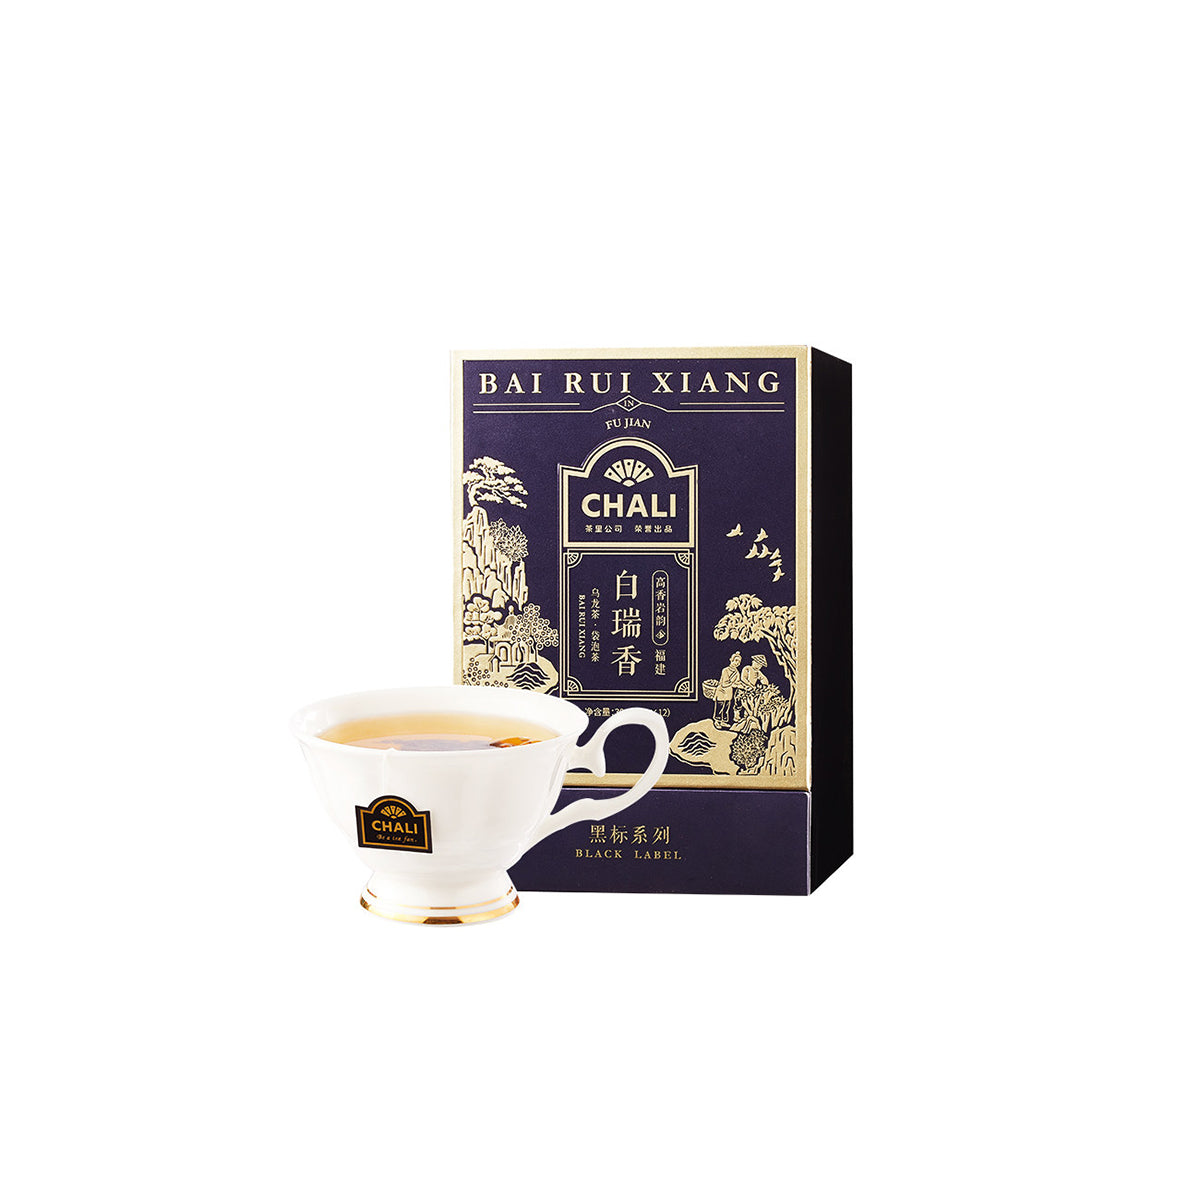 Black Label Oolong Tea Series - Bai Rui Xiang 30g (12 Tea Bags)